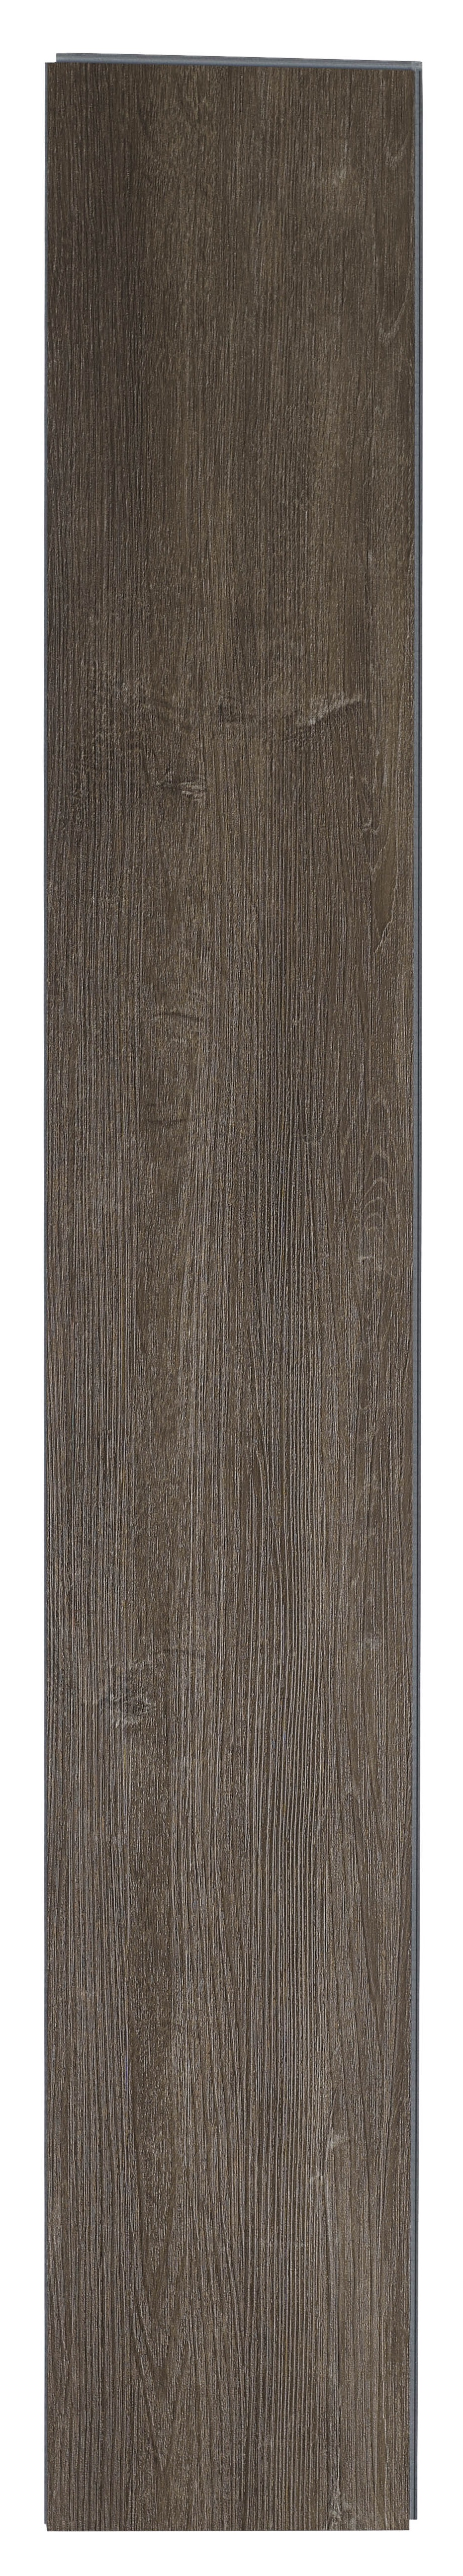 Turner Rich Walnut Brown SPC Flooring with Integrated Underlay - Sample